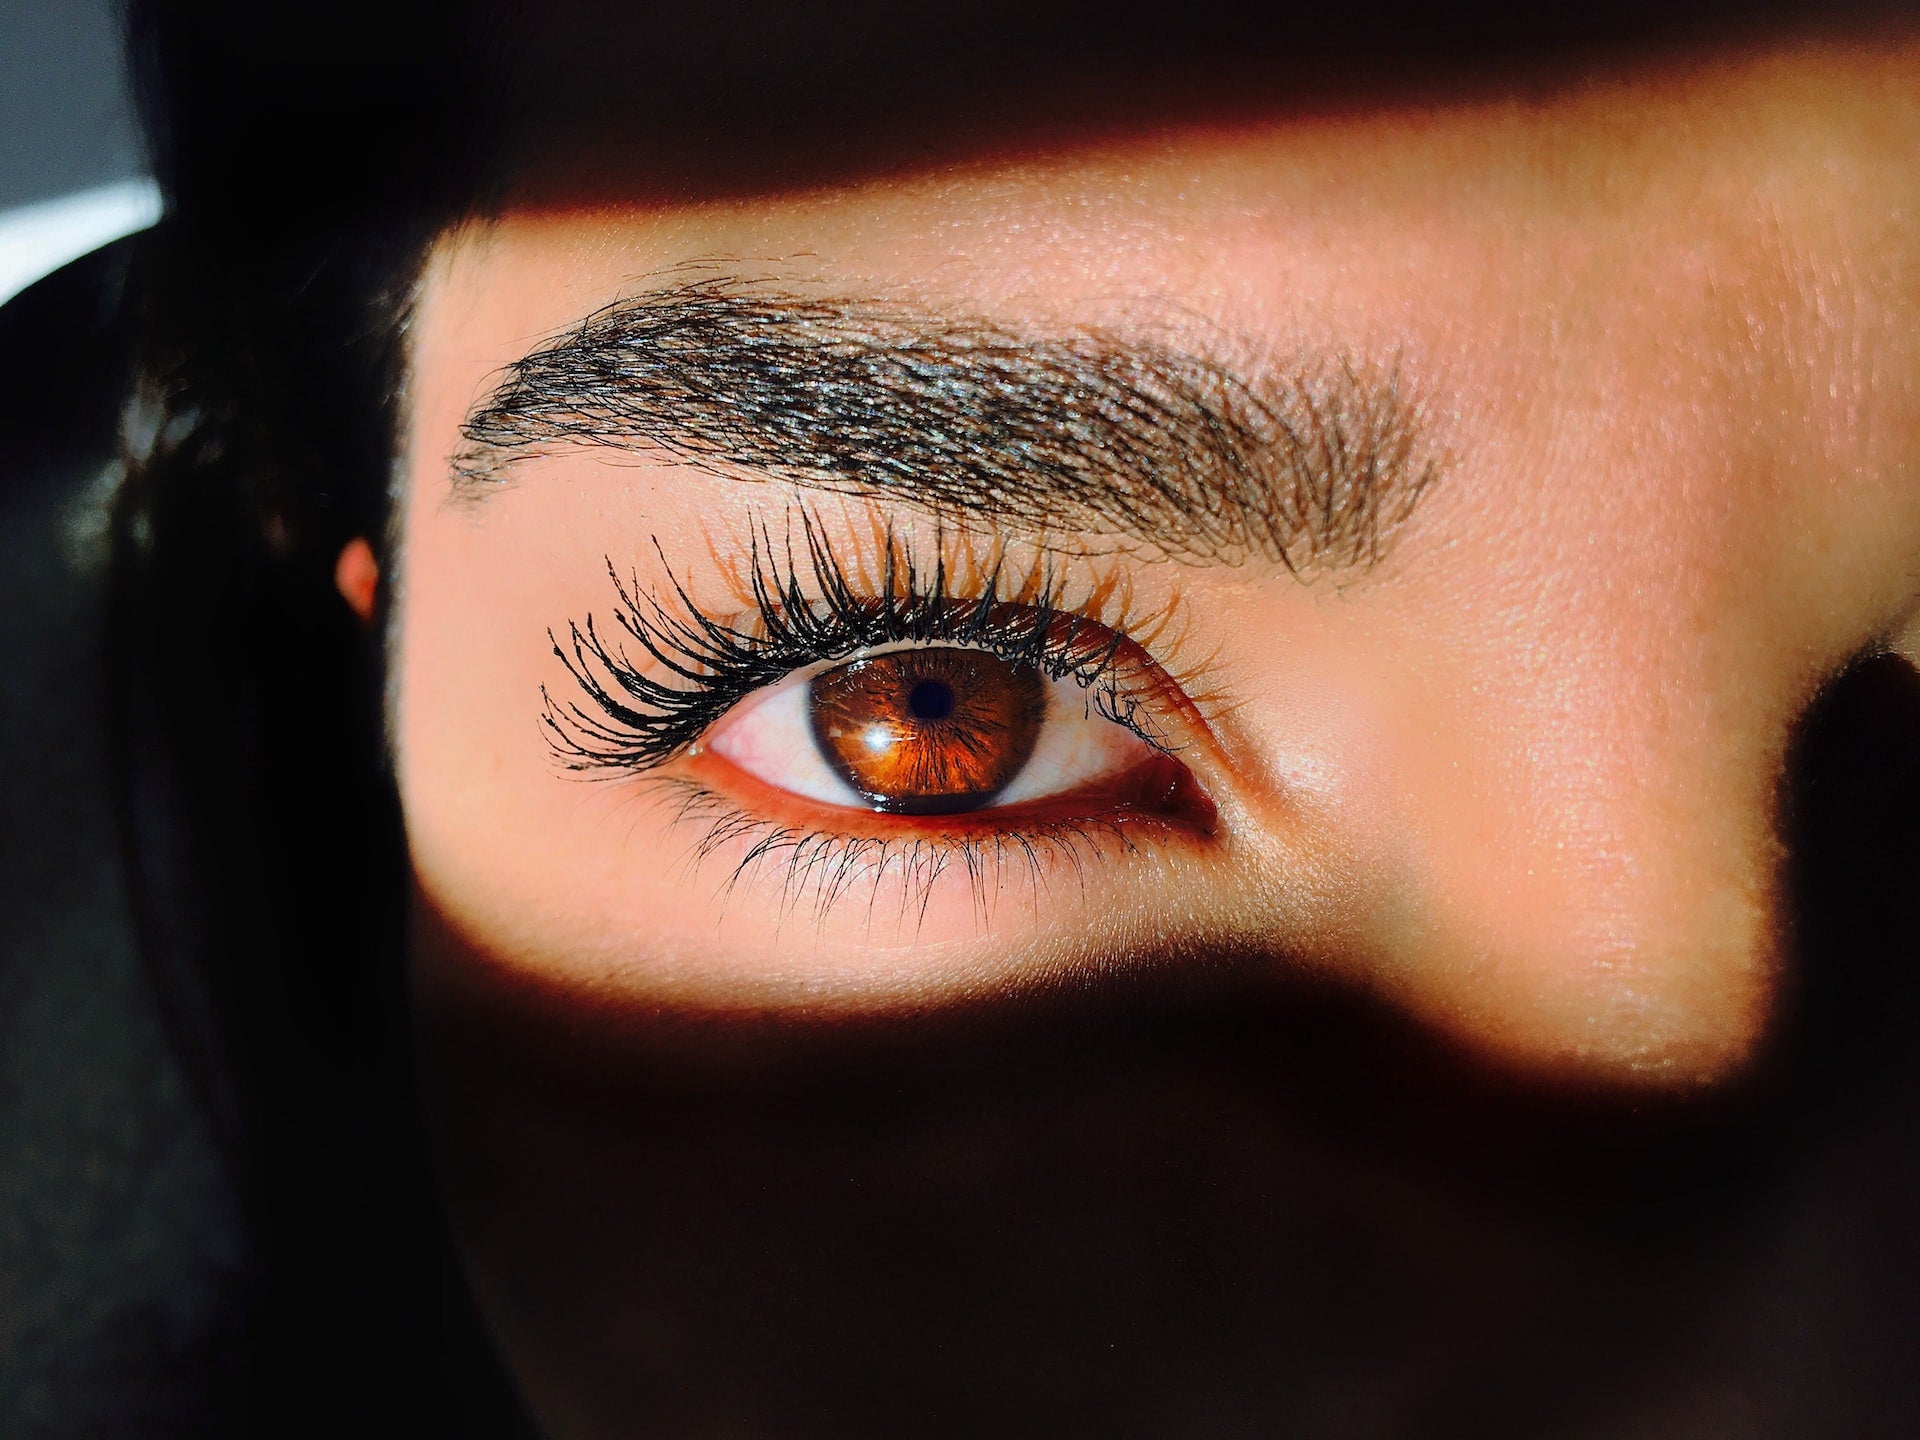 wom5 Reasons Why Eyebrow Lamination Is Becoming More Popularan's eyebrow